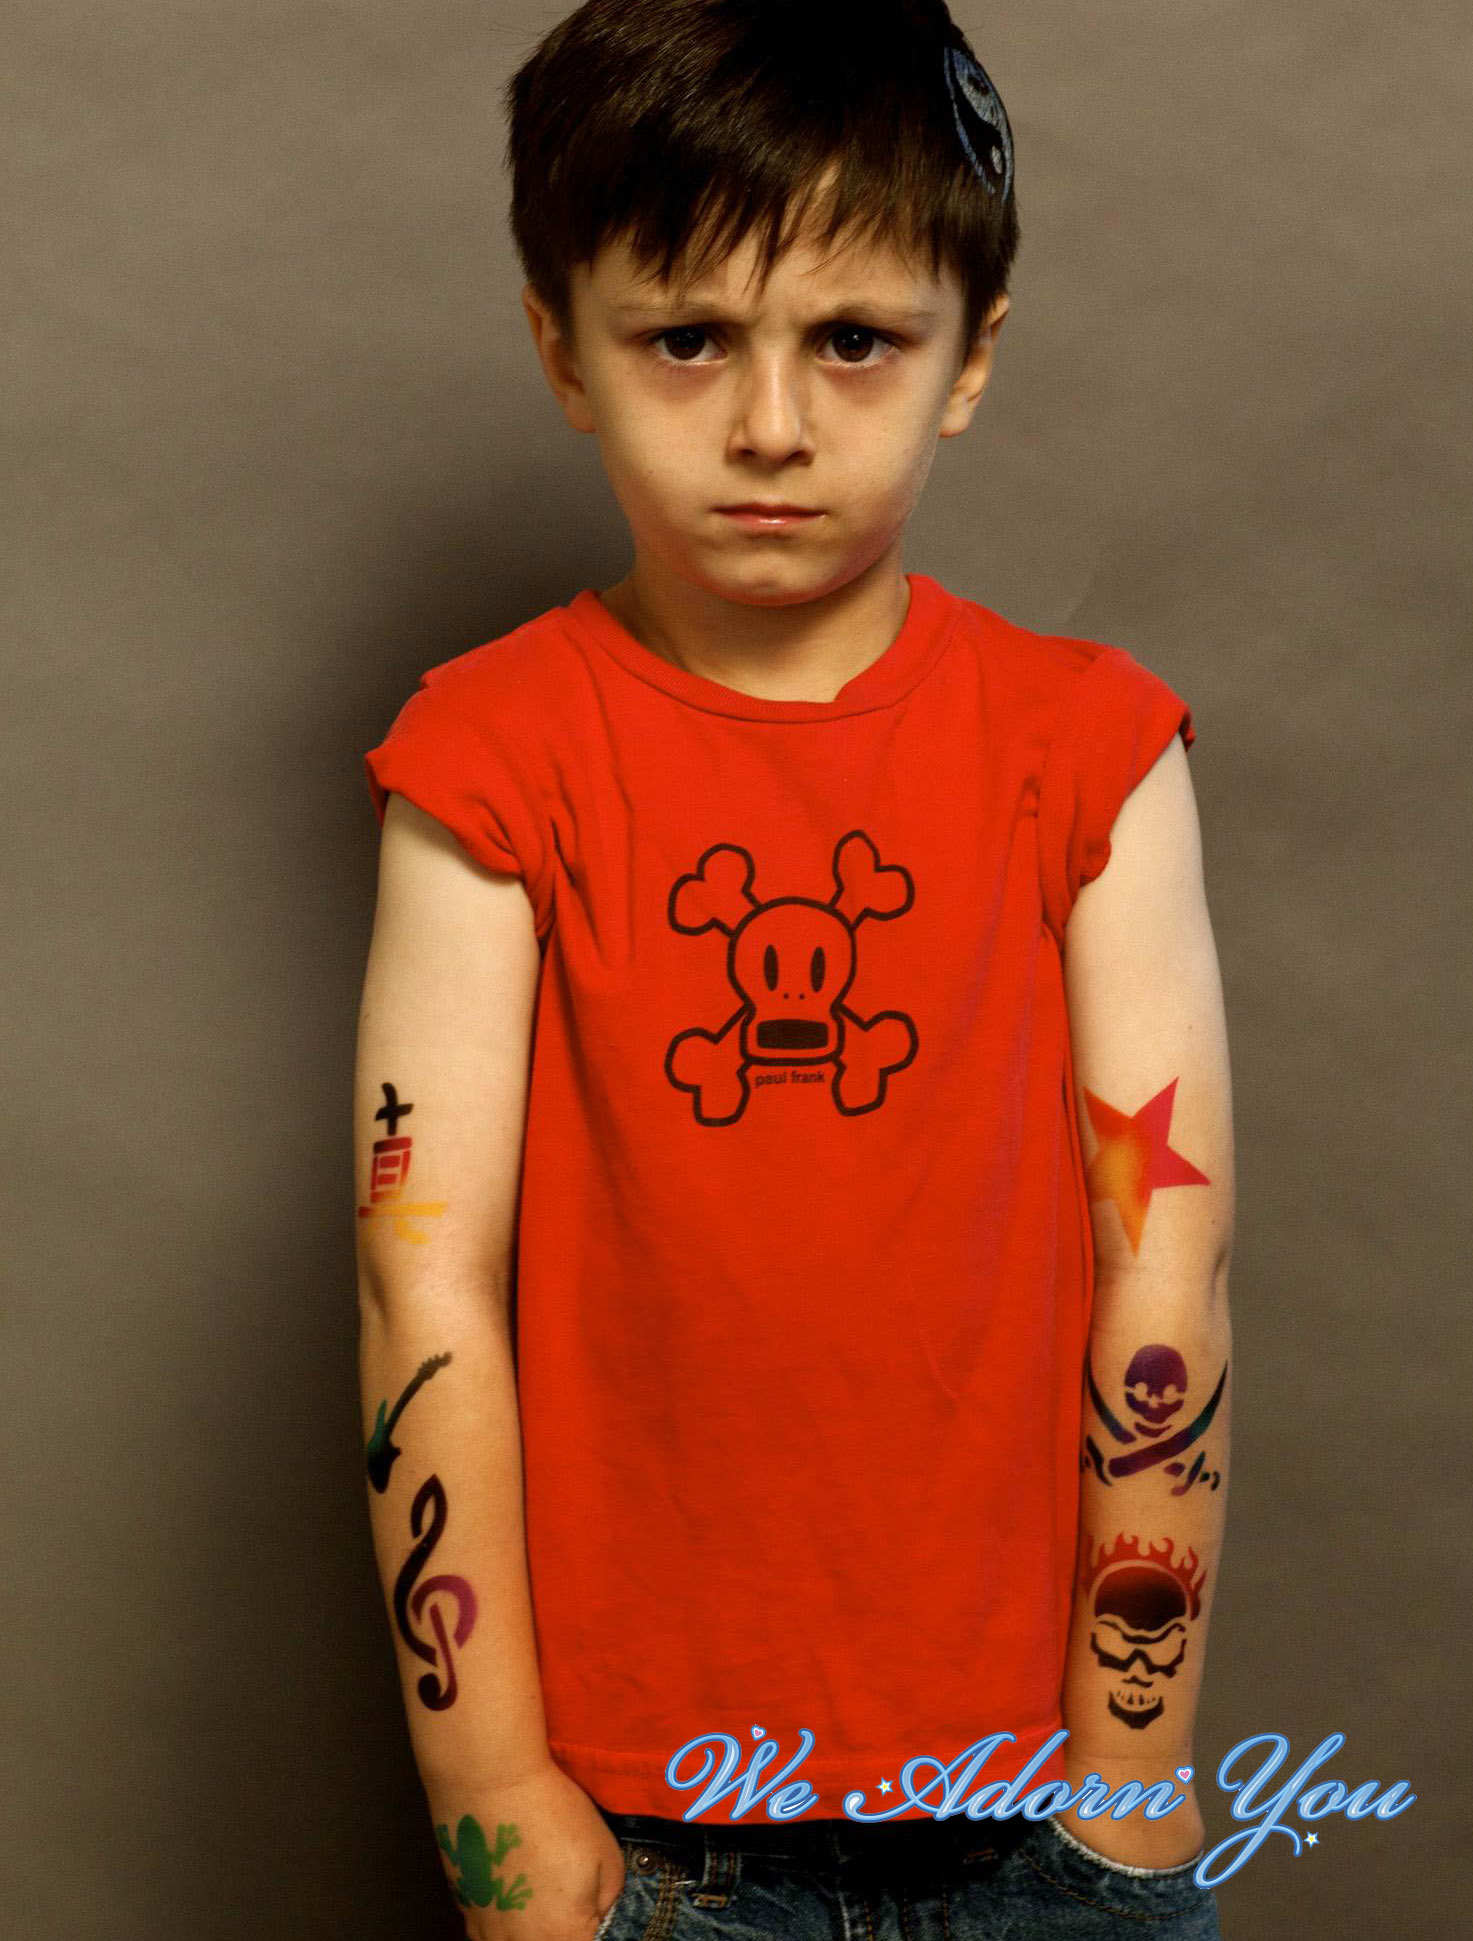 Airbrush Tattoo Boy - We Adorn You.jpg